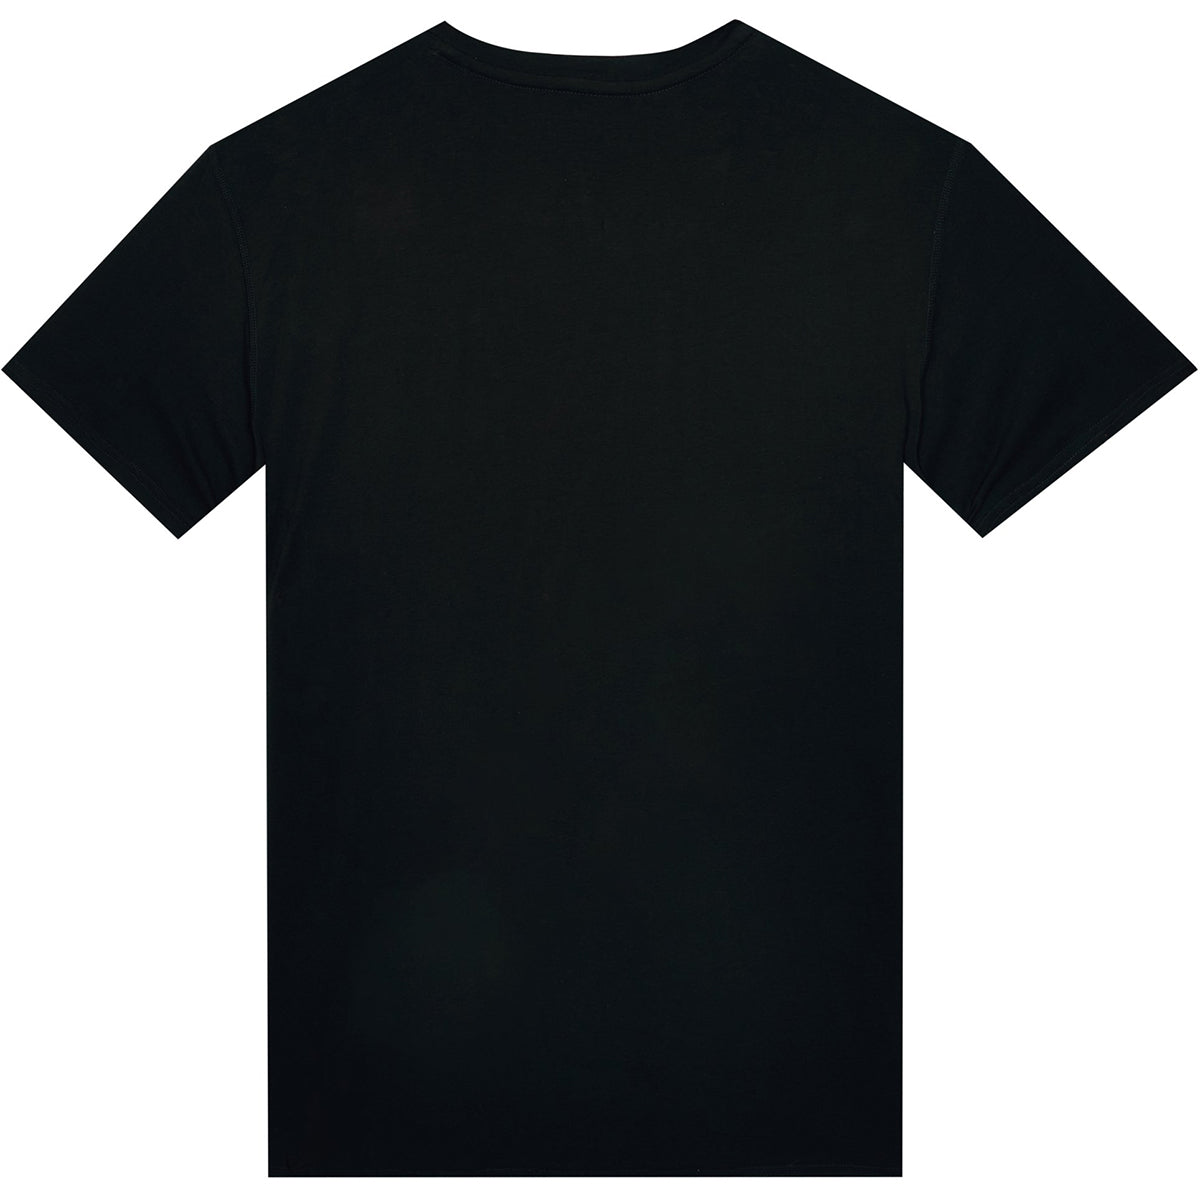 Tatami Fightwear Logo T-Shirt - Black/White Tatami Fightwear